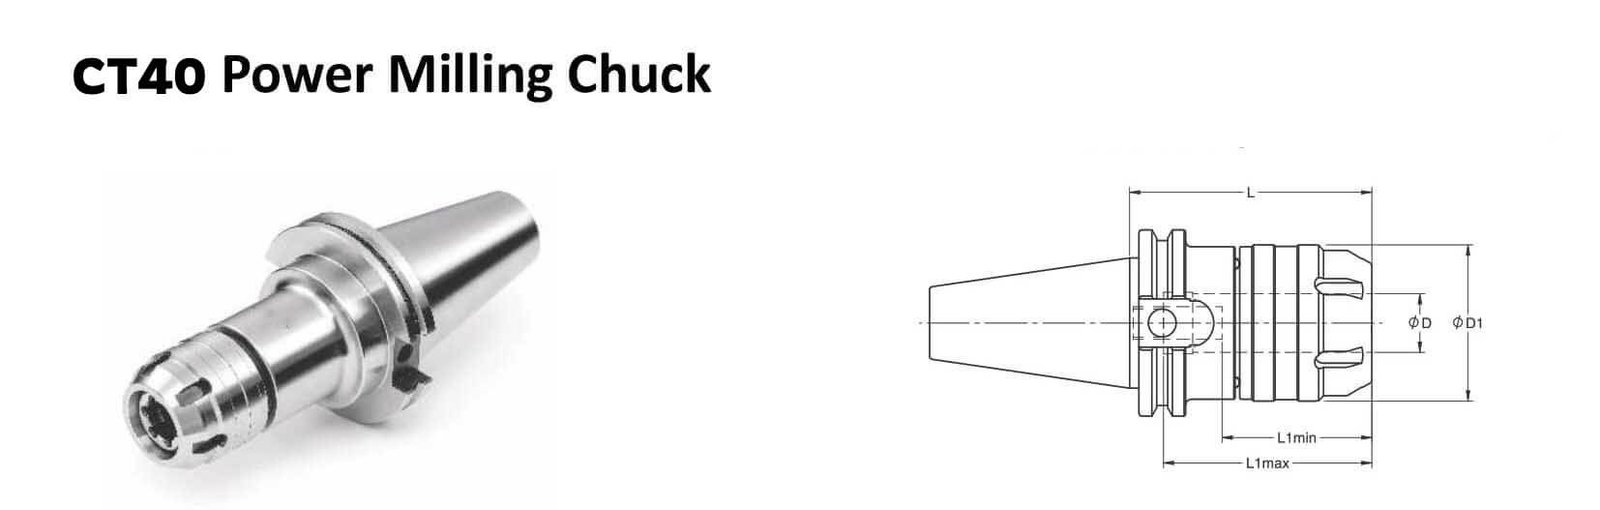 CT40 C 0.750 - 3.25 Power Milling Chuck (Balanced to 2.5G 25000 rpm)